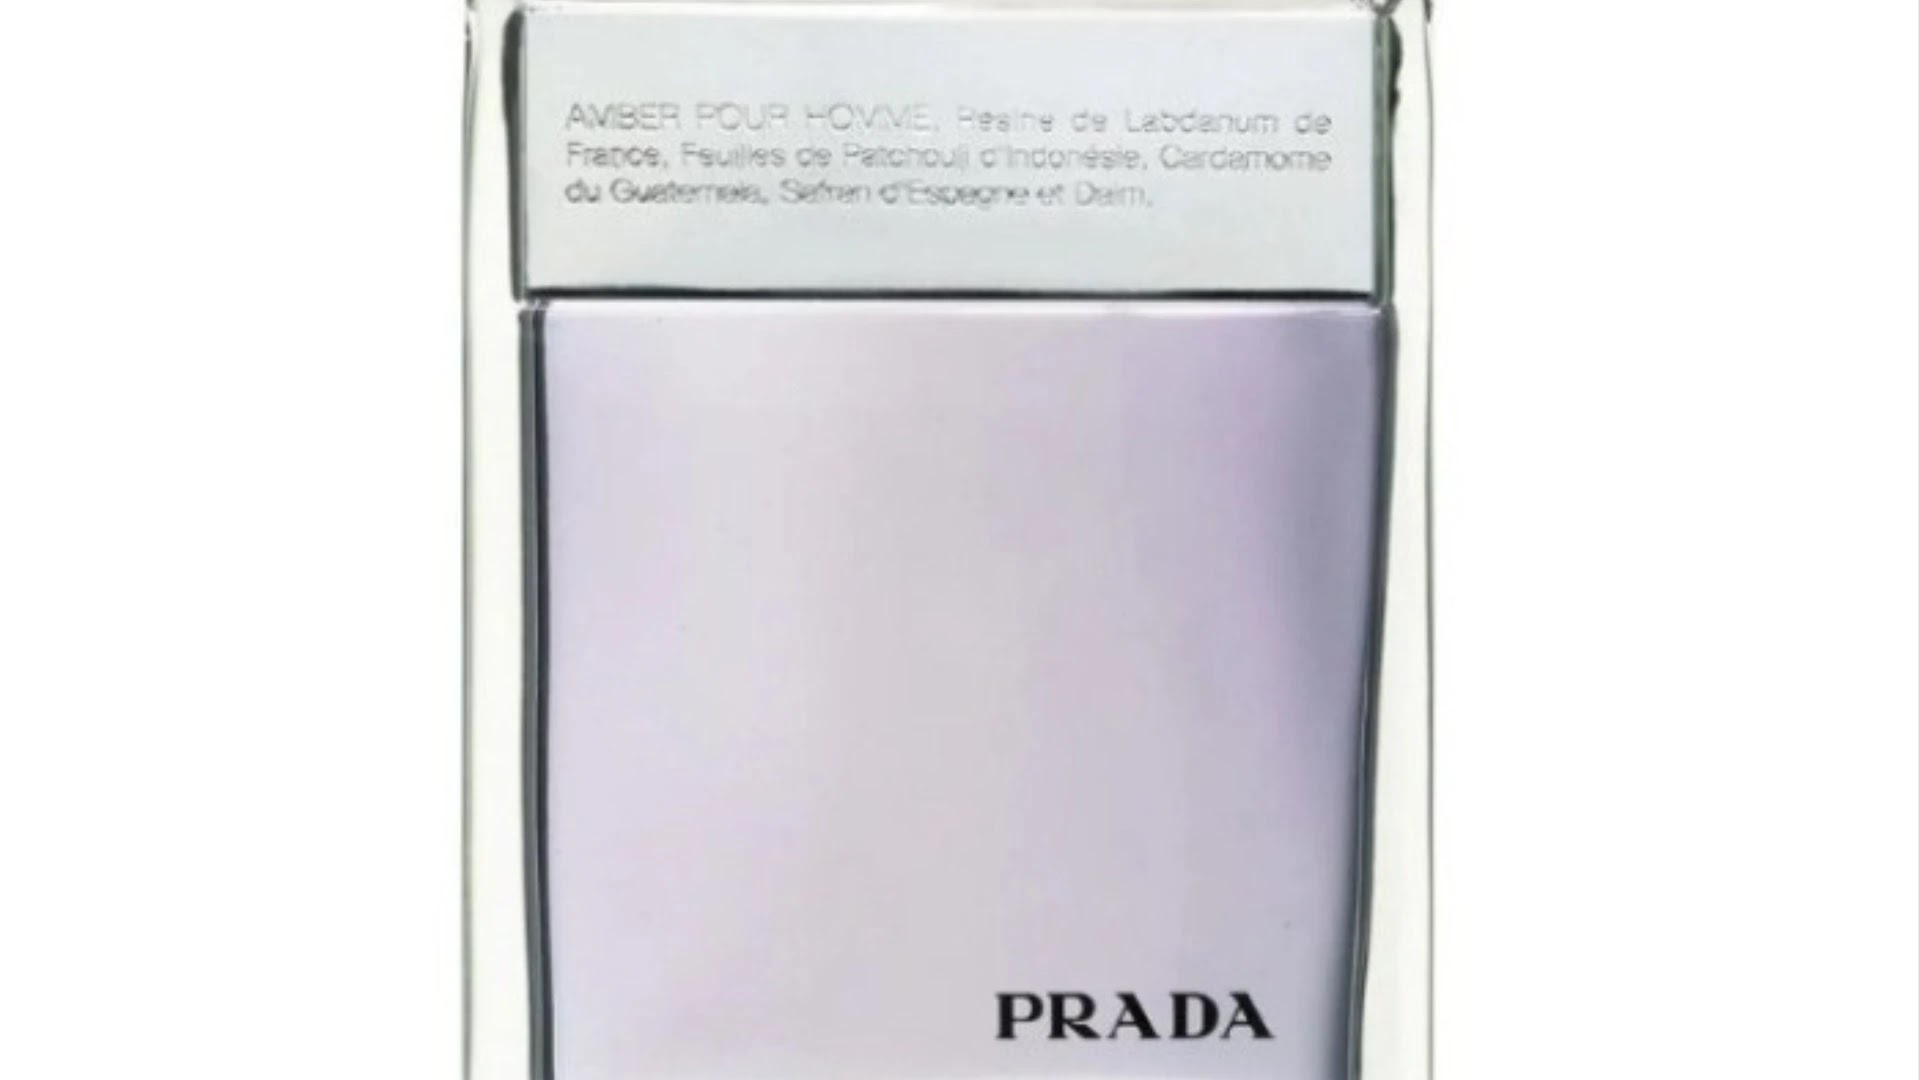 Parfum Prada